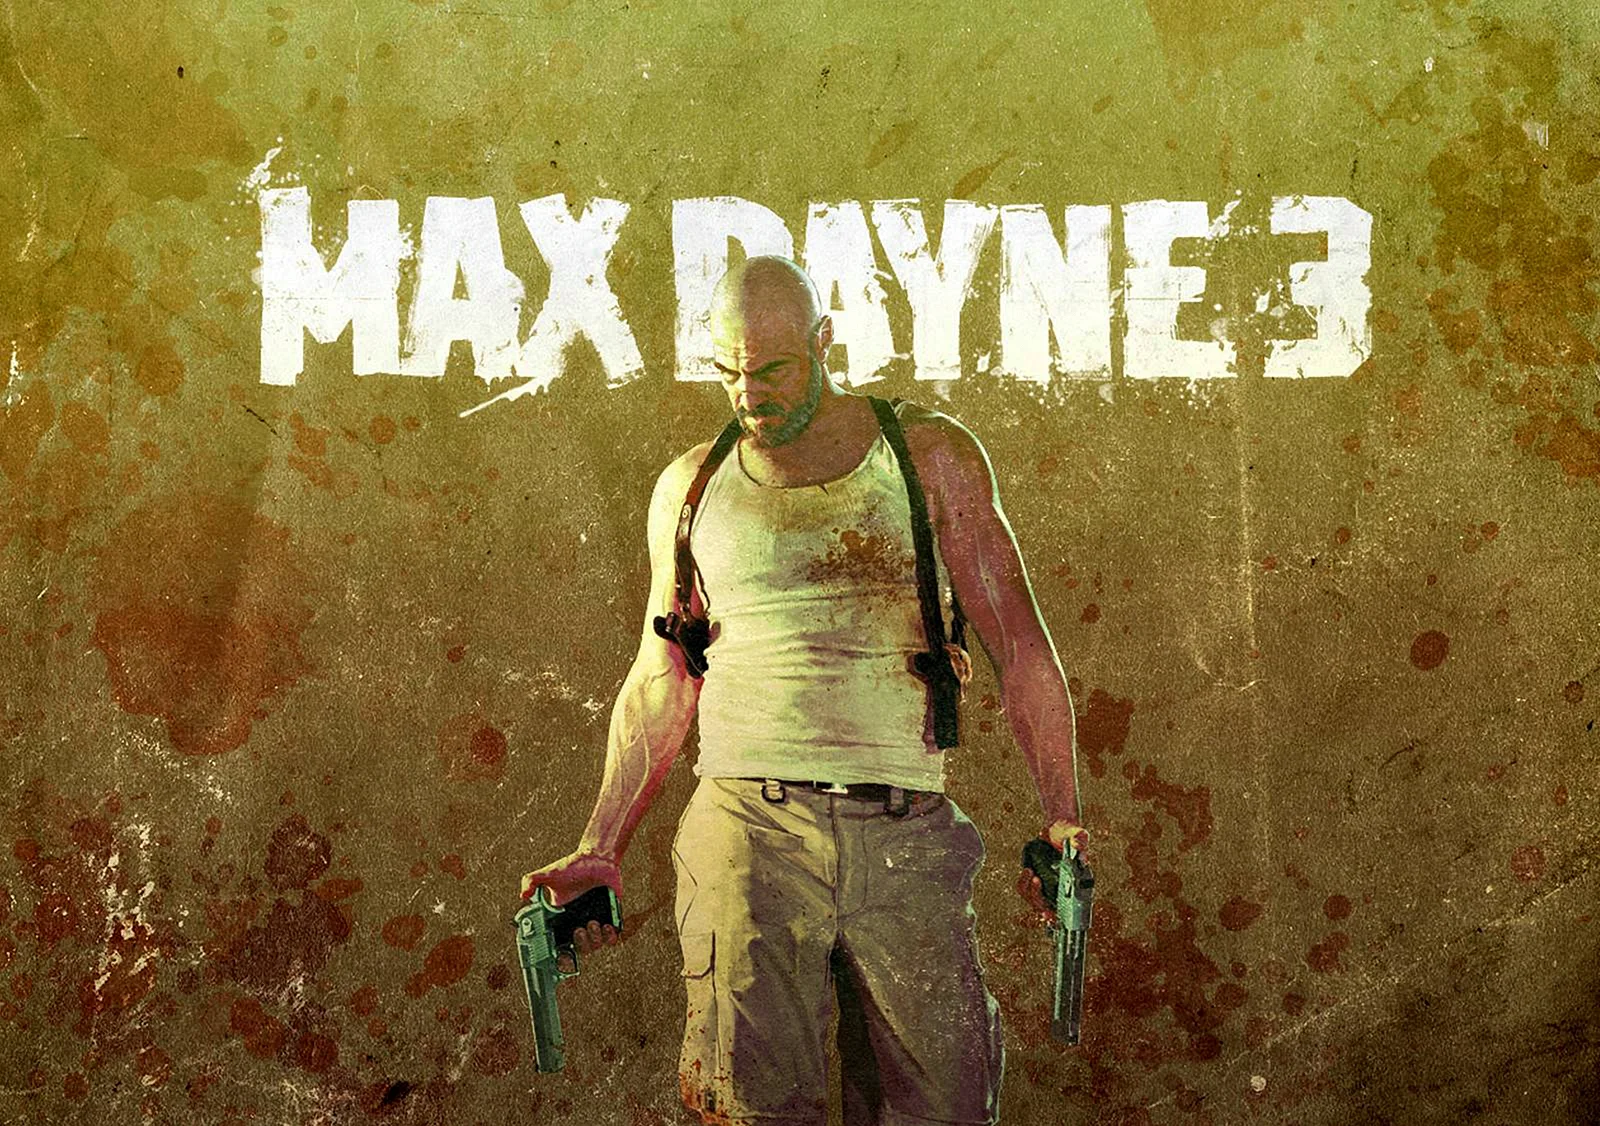 Max Payne 3 HD Wallpaper